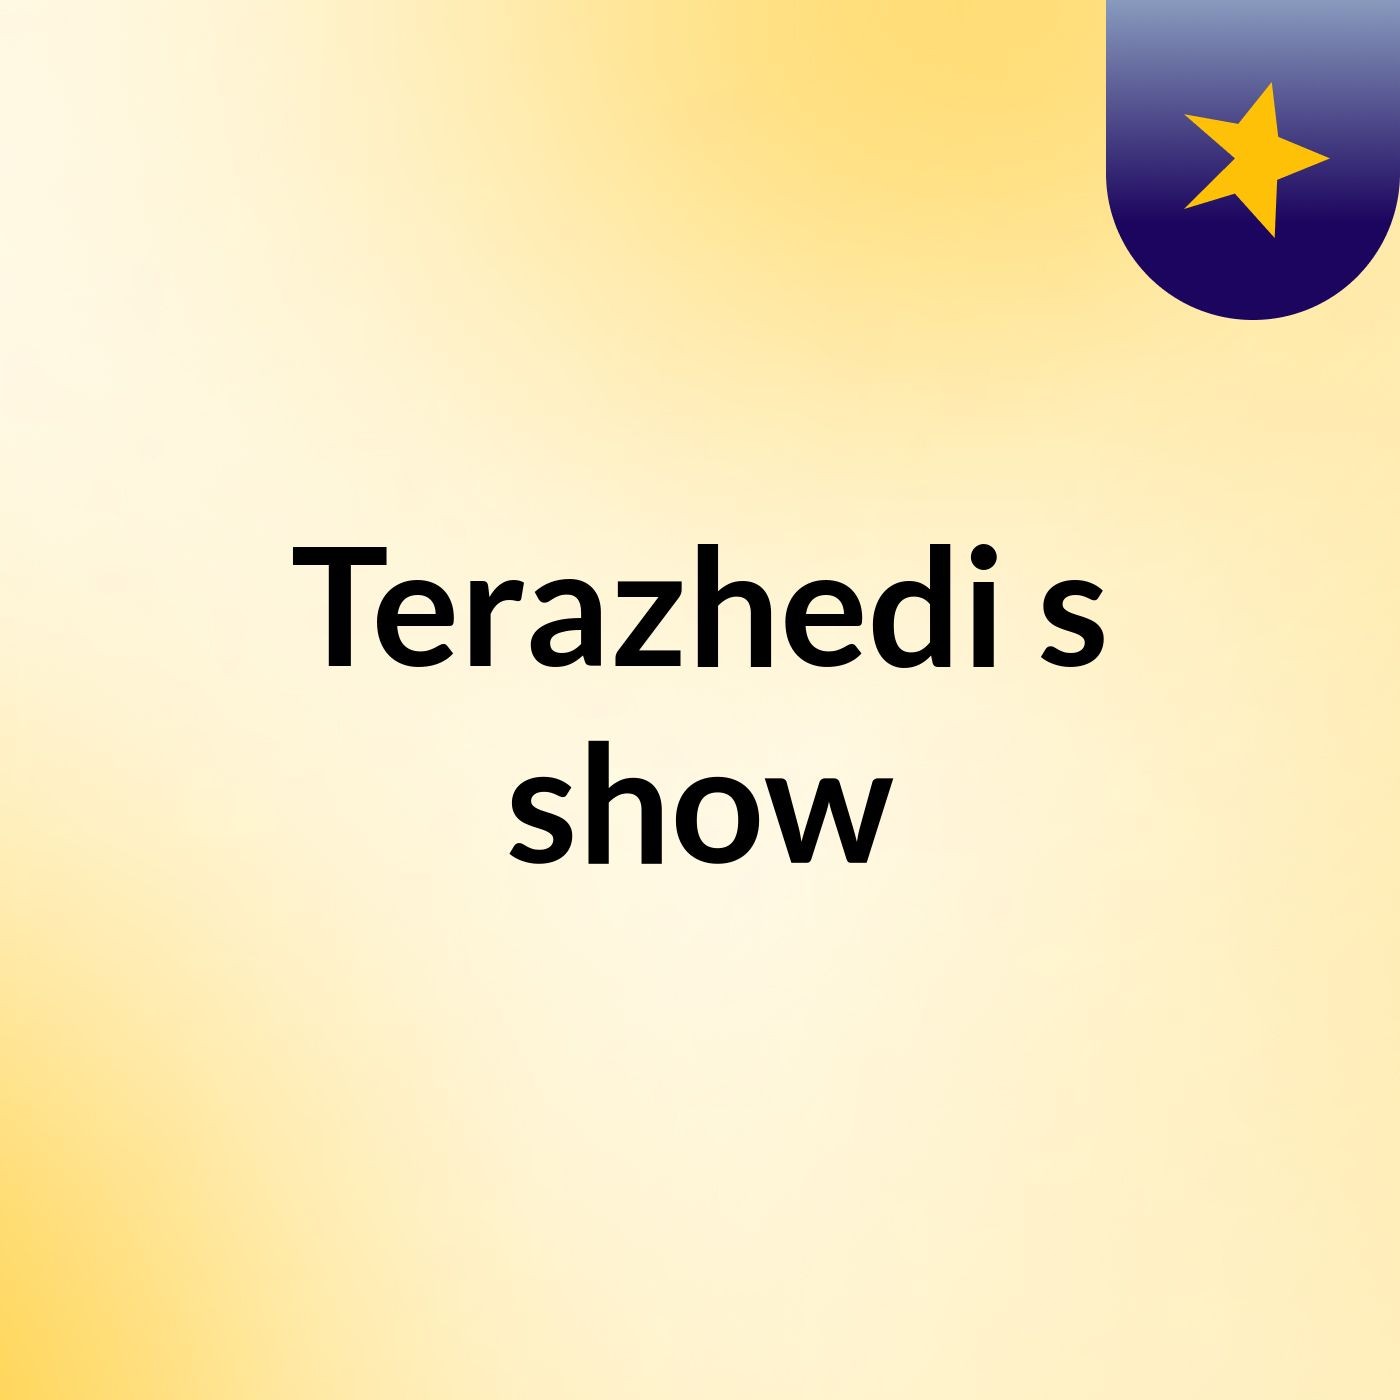 Terazhedi's show